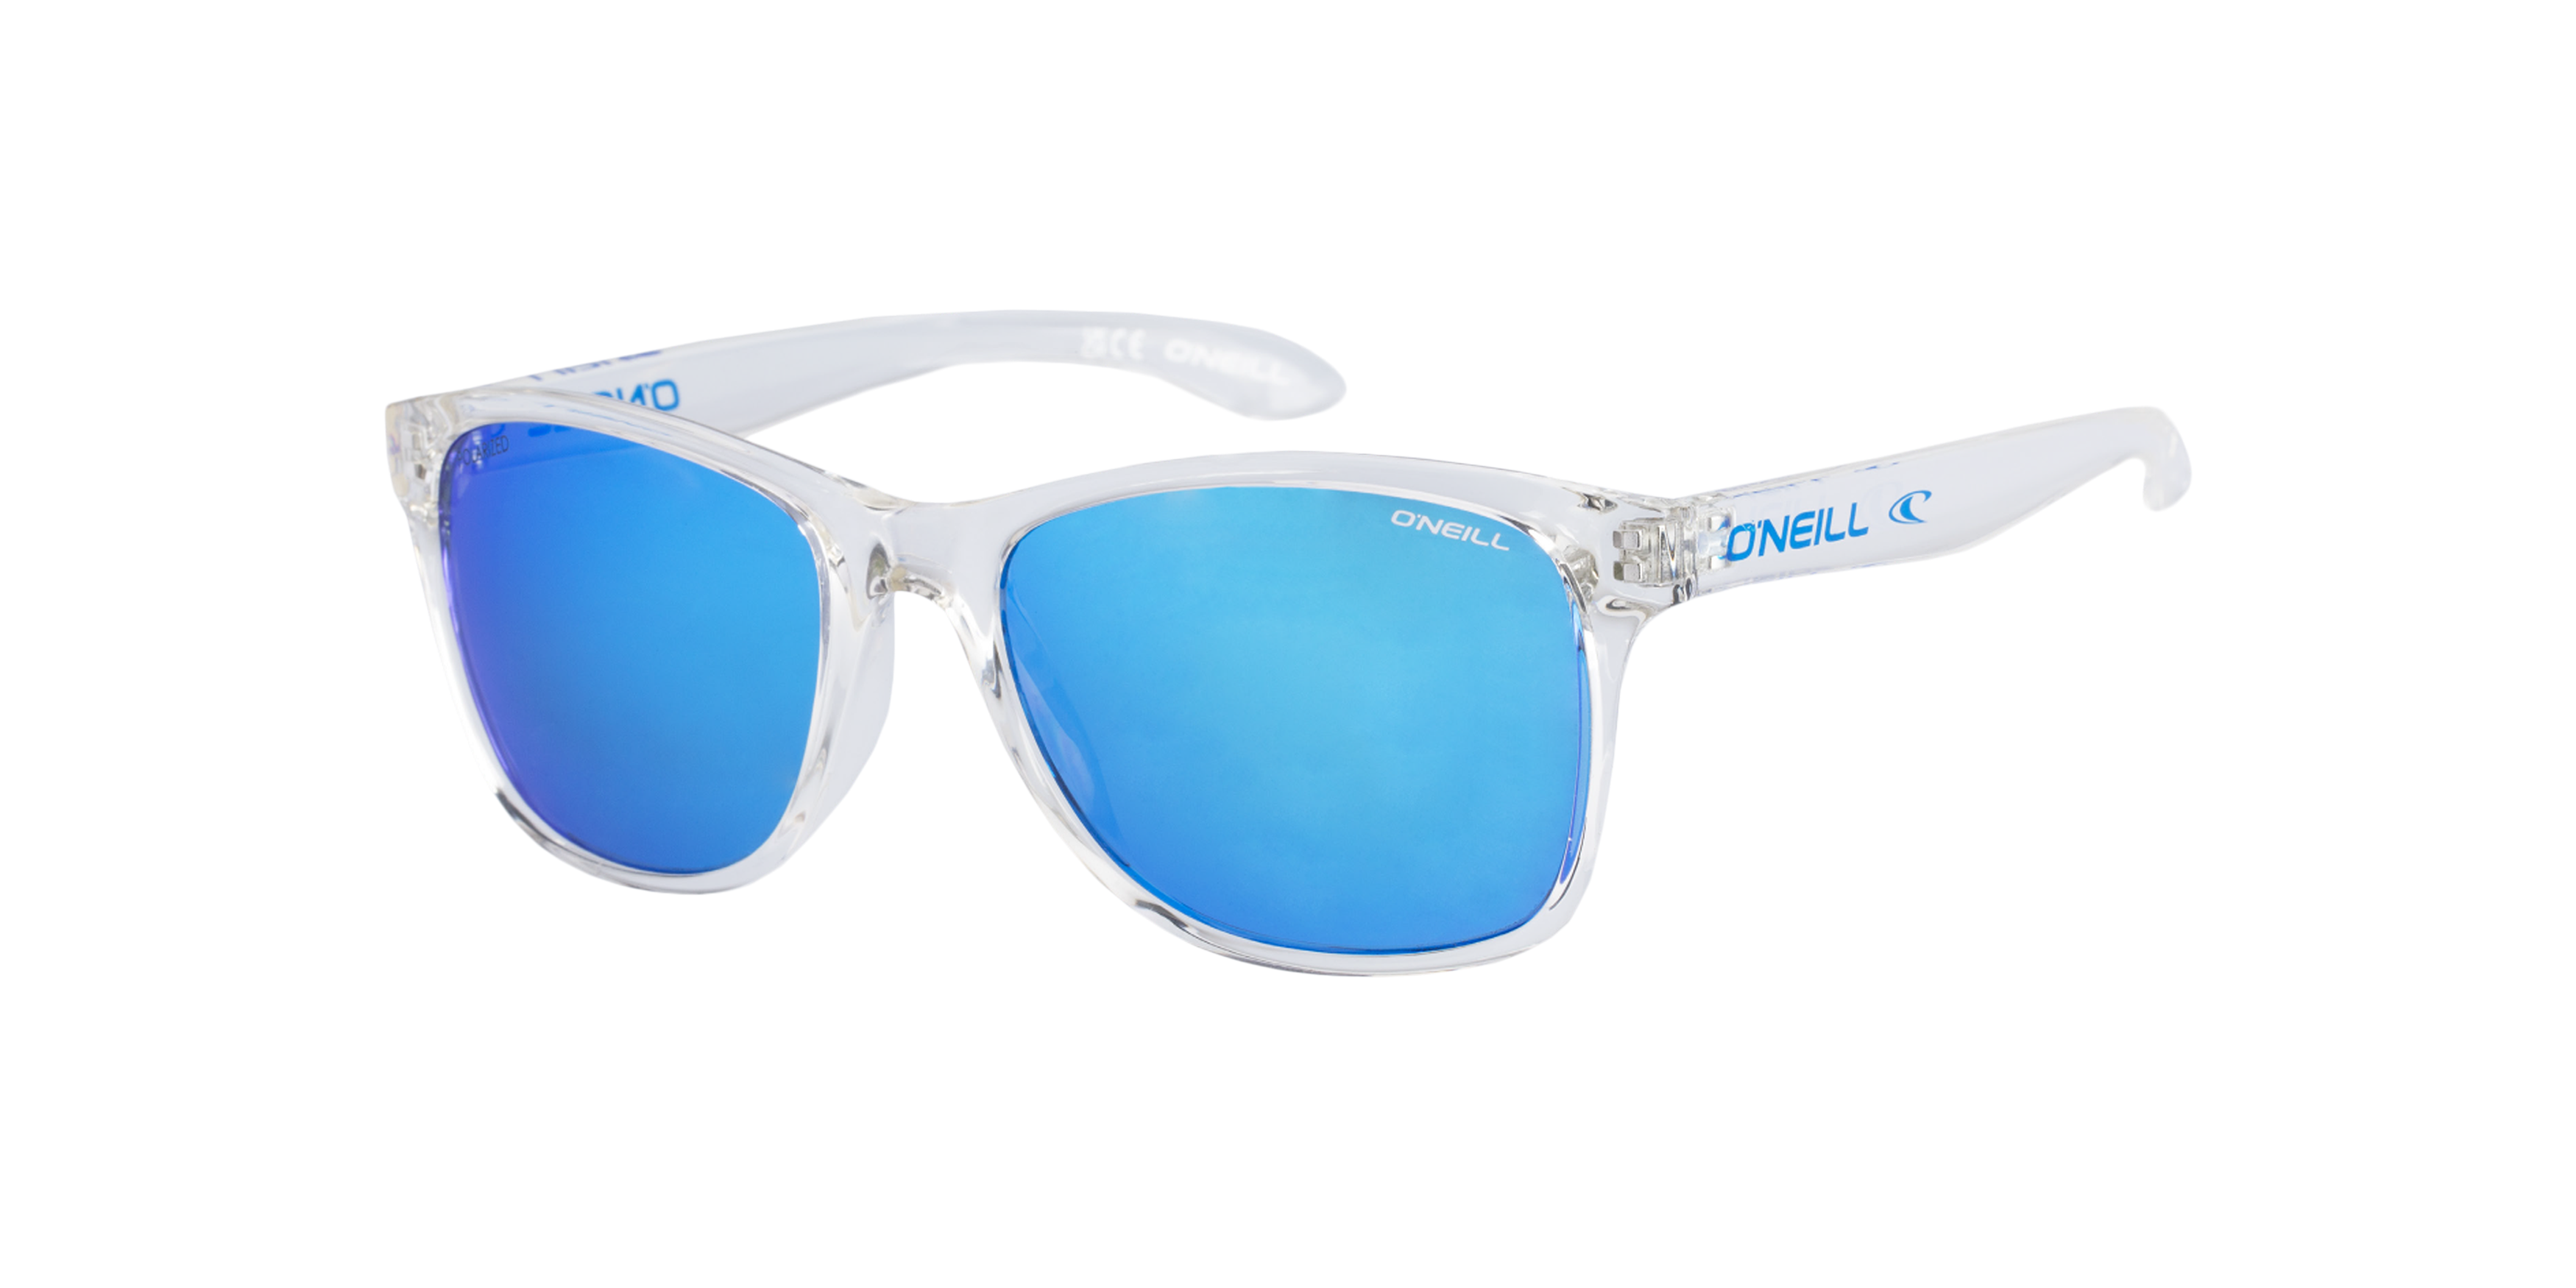 Angle_Left01 O'Neill Offshore 2.0 Sunglasses Blue / Transparent, Clear